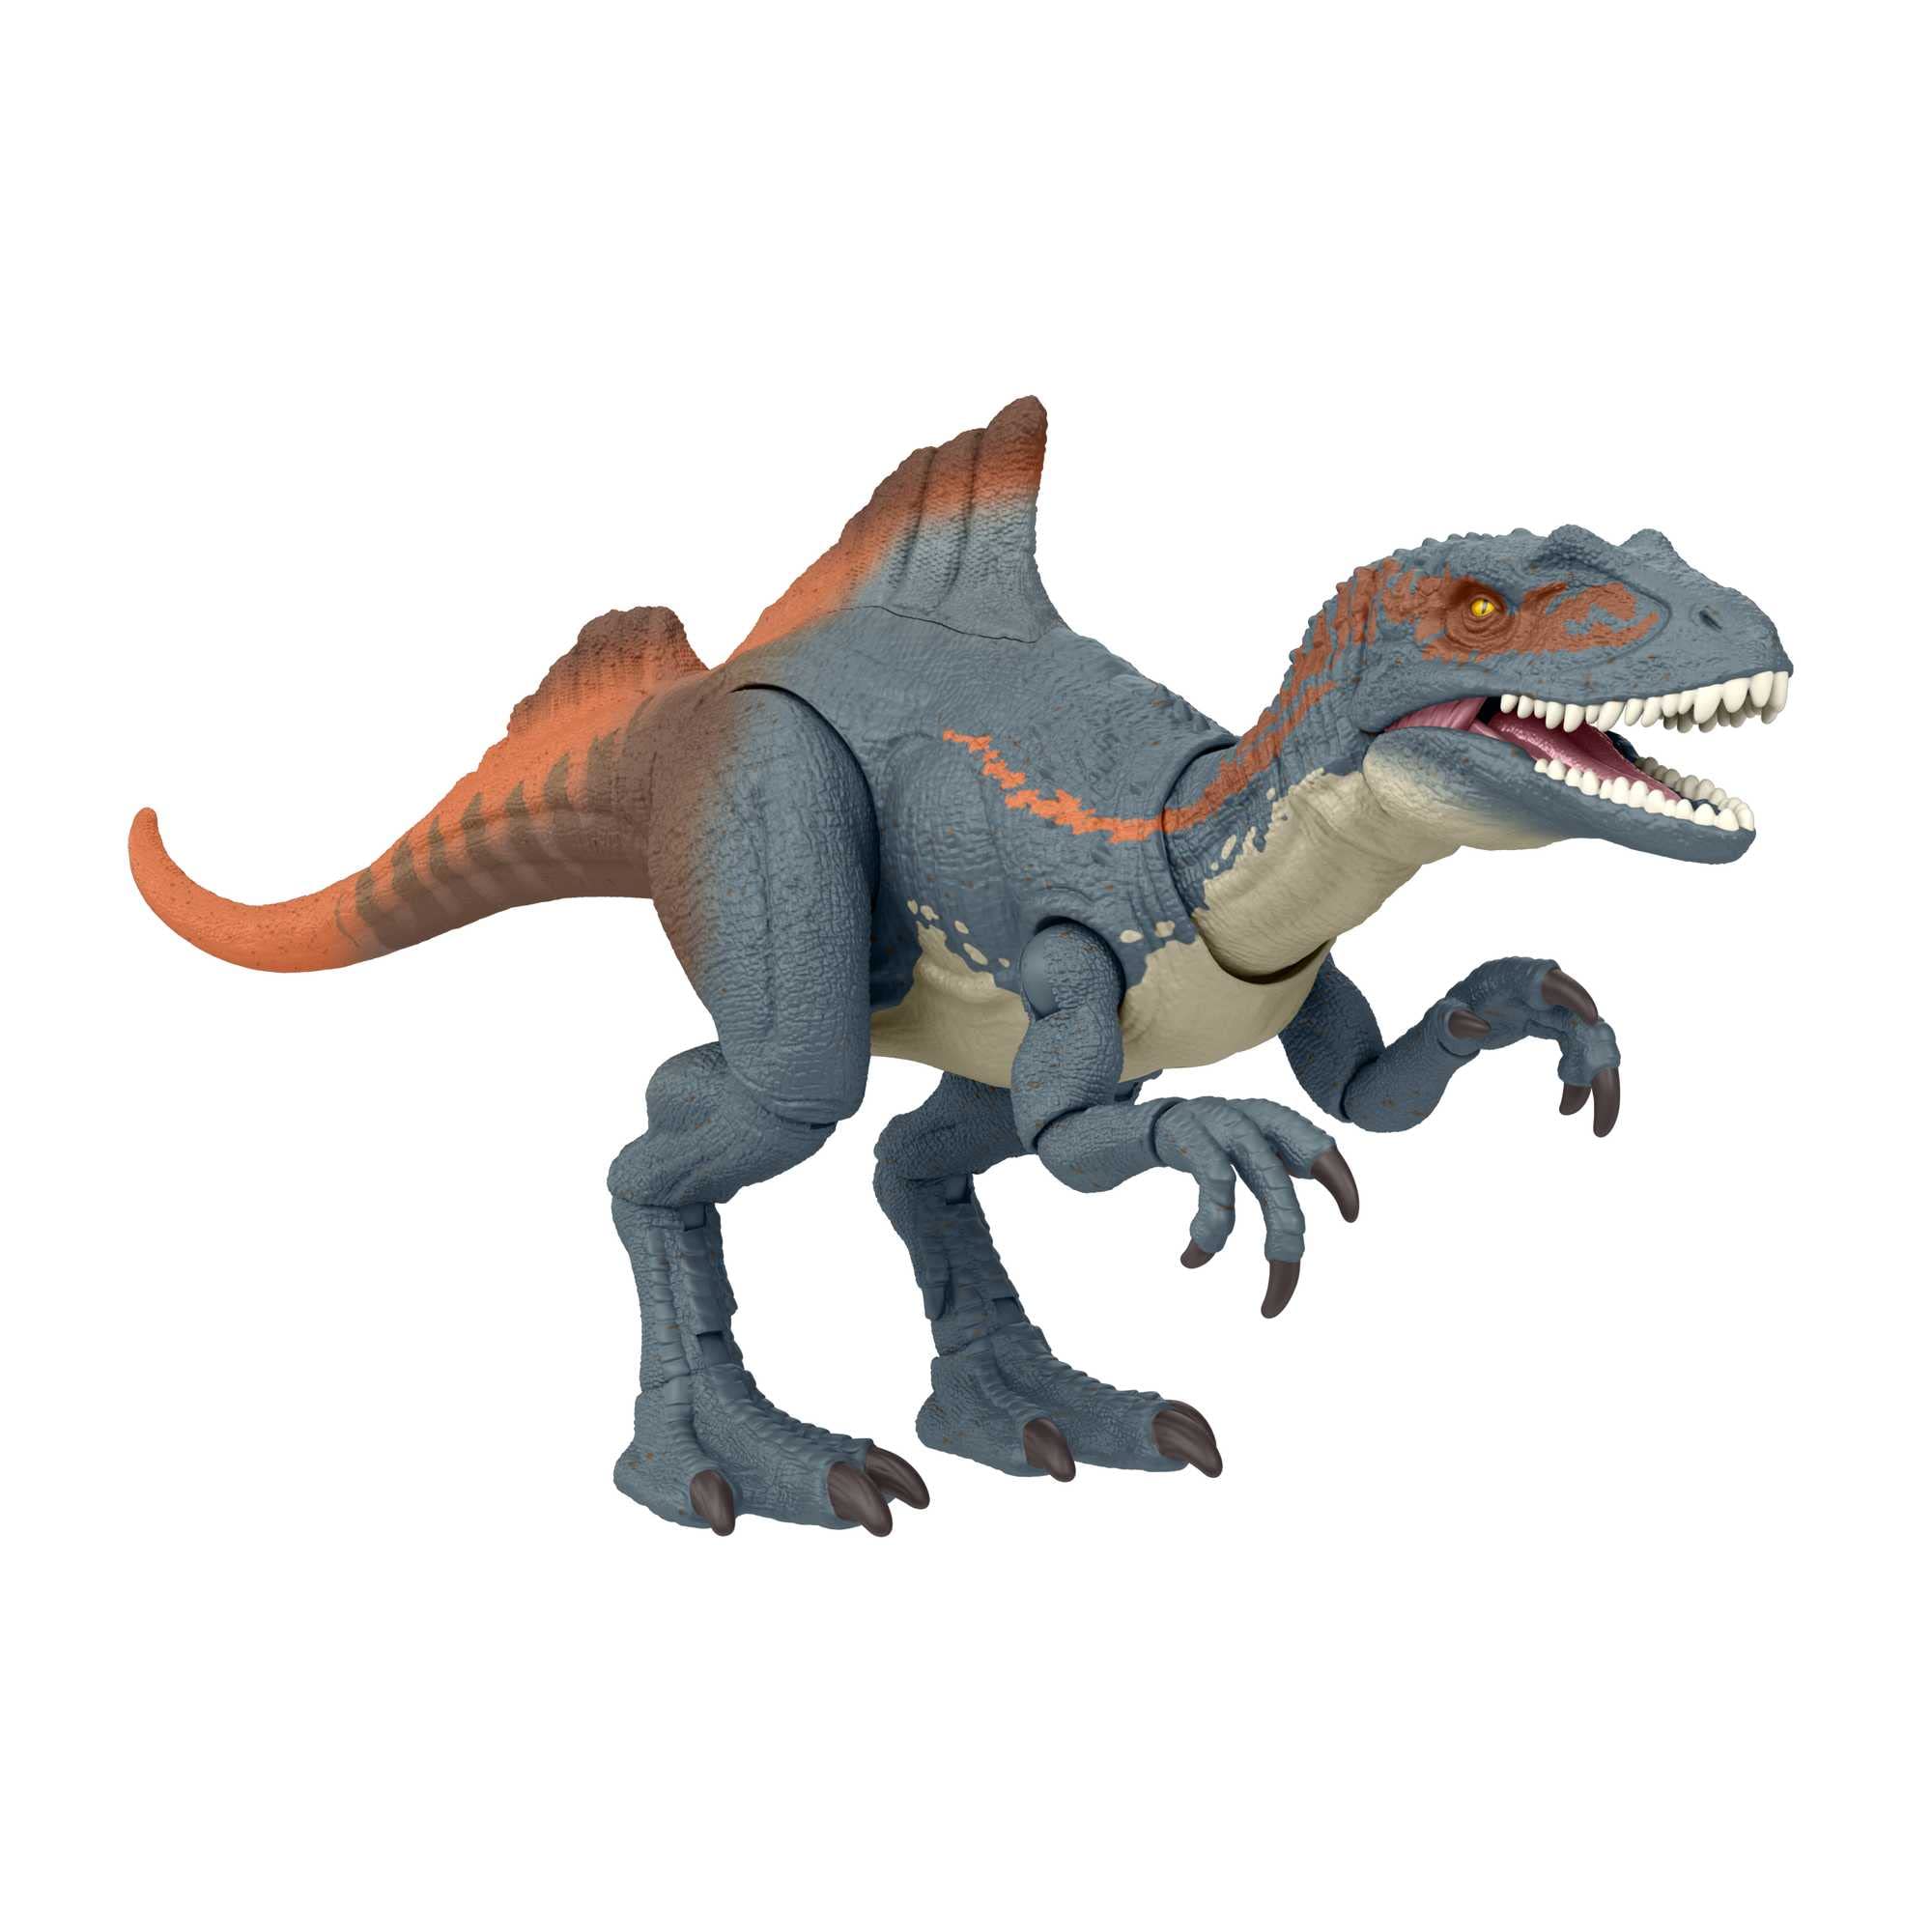 Jurassic World Lost World - Hammond Collection Concavenator Dinosaur Action Figure